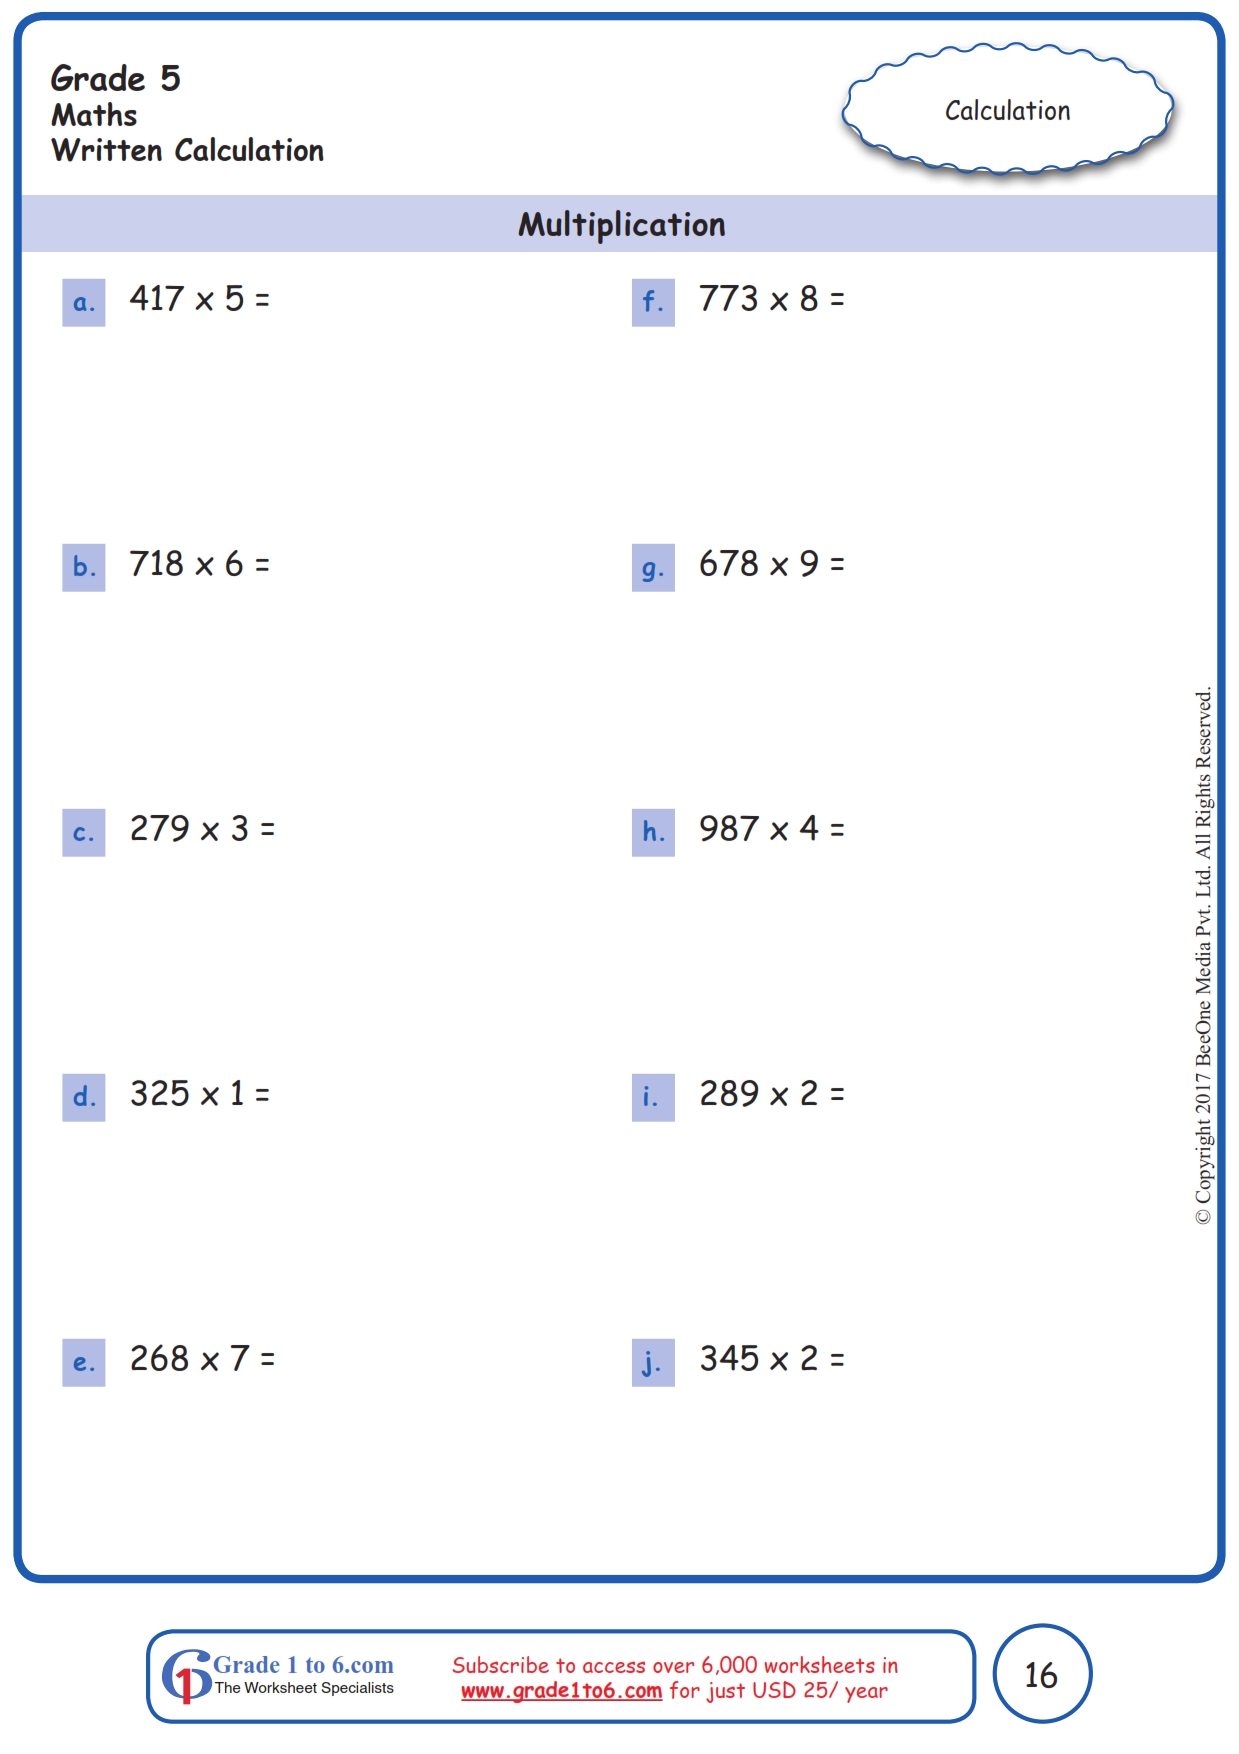 grade-5-multiplication-worksheets-www-grade1to6